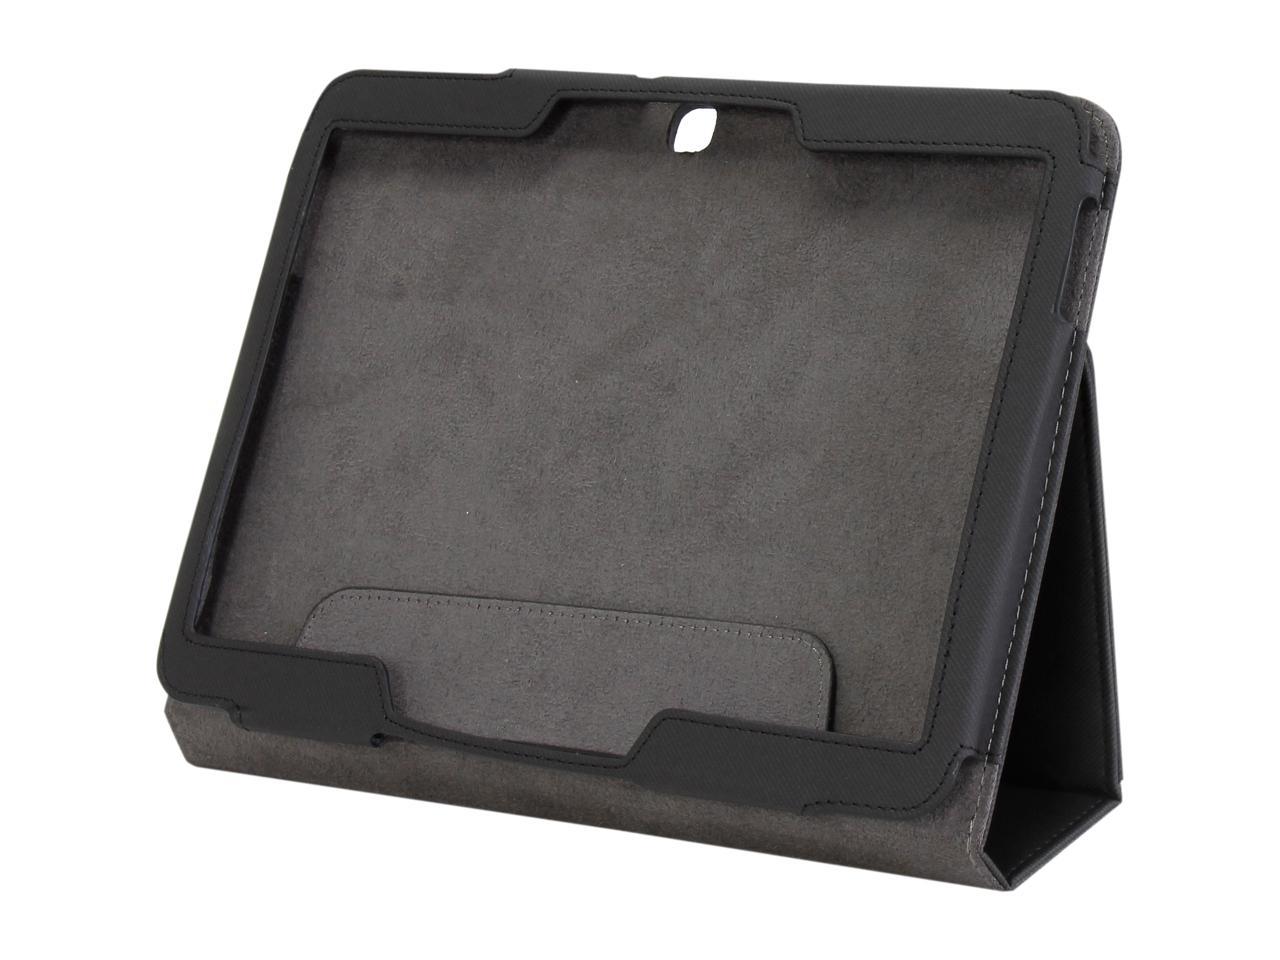 Kensington Black Comercio Soft Folio Case & Stand for Galaxy Tab 3 (10.1") Model K97096WW